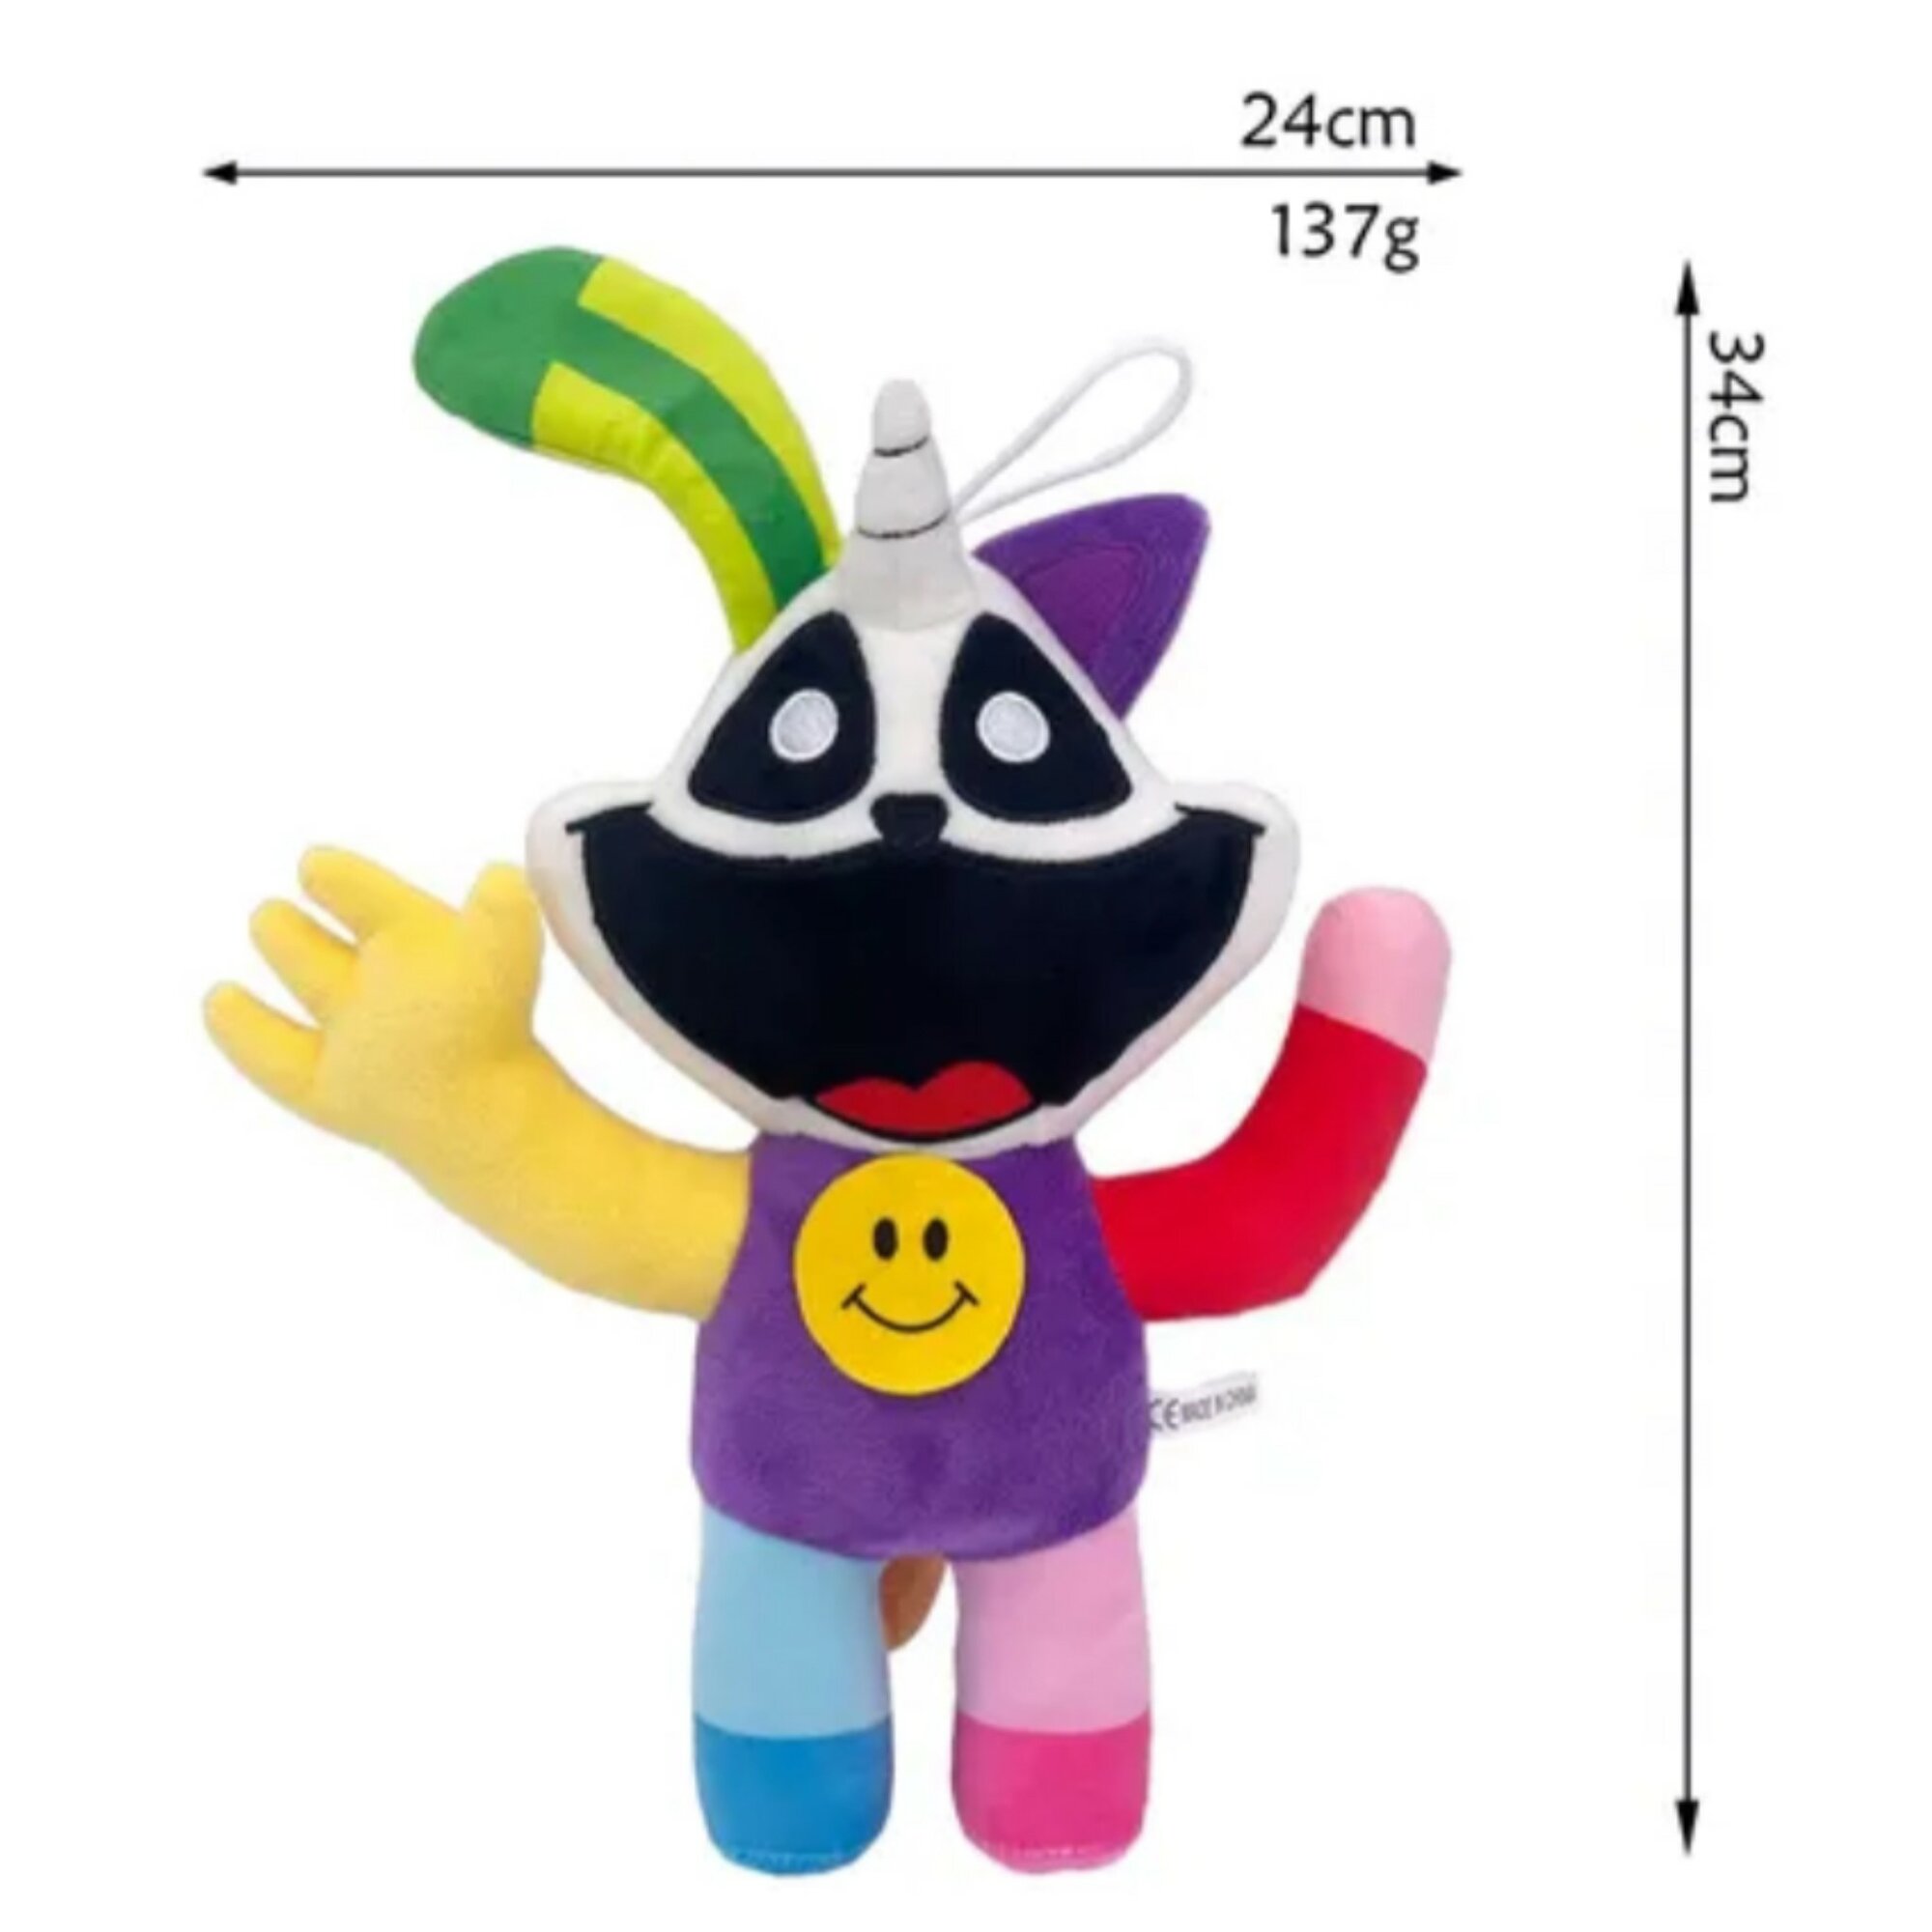 Мягкая плюшевая игрушка Poppy playtime Smiling Critters - 30см цветной